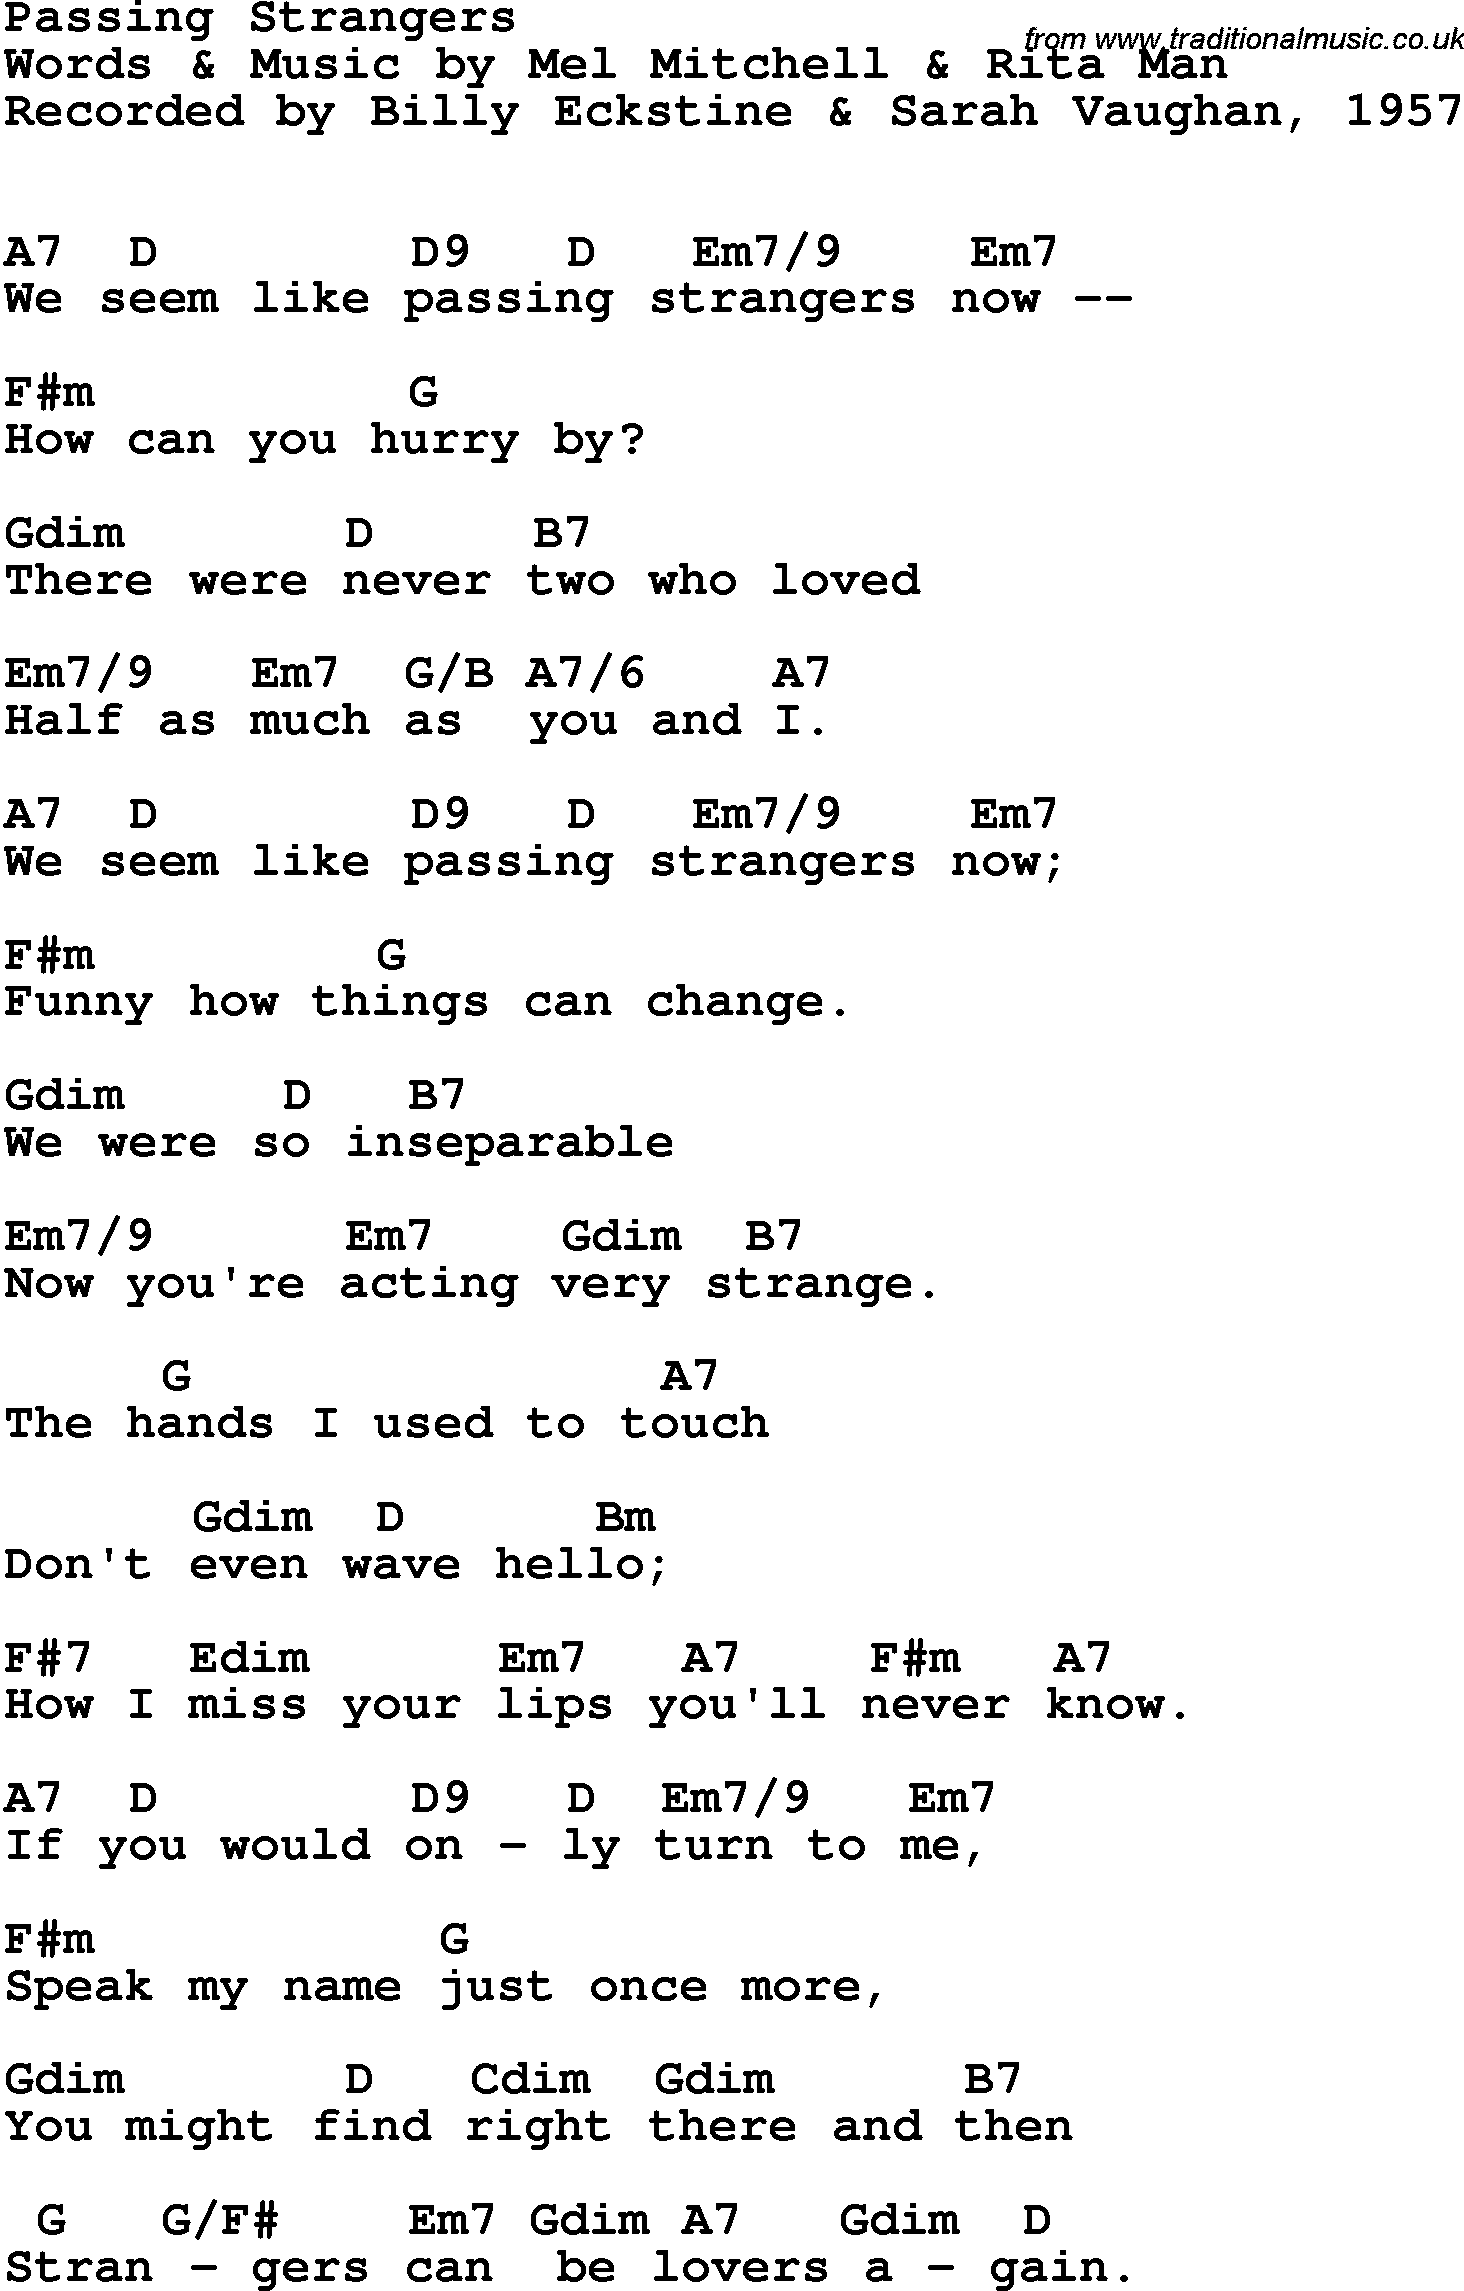 Song Lyrics with guitar chords for Passing Strangers - Sarah Vaughan & Billy Eckstine, 1957